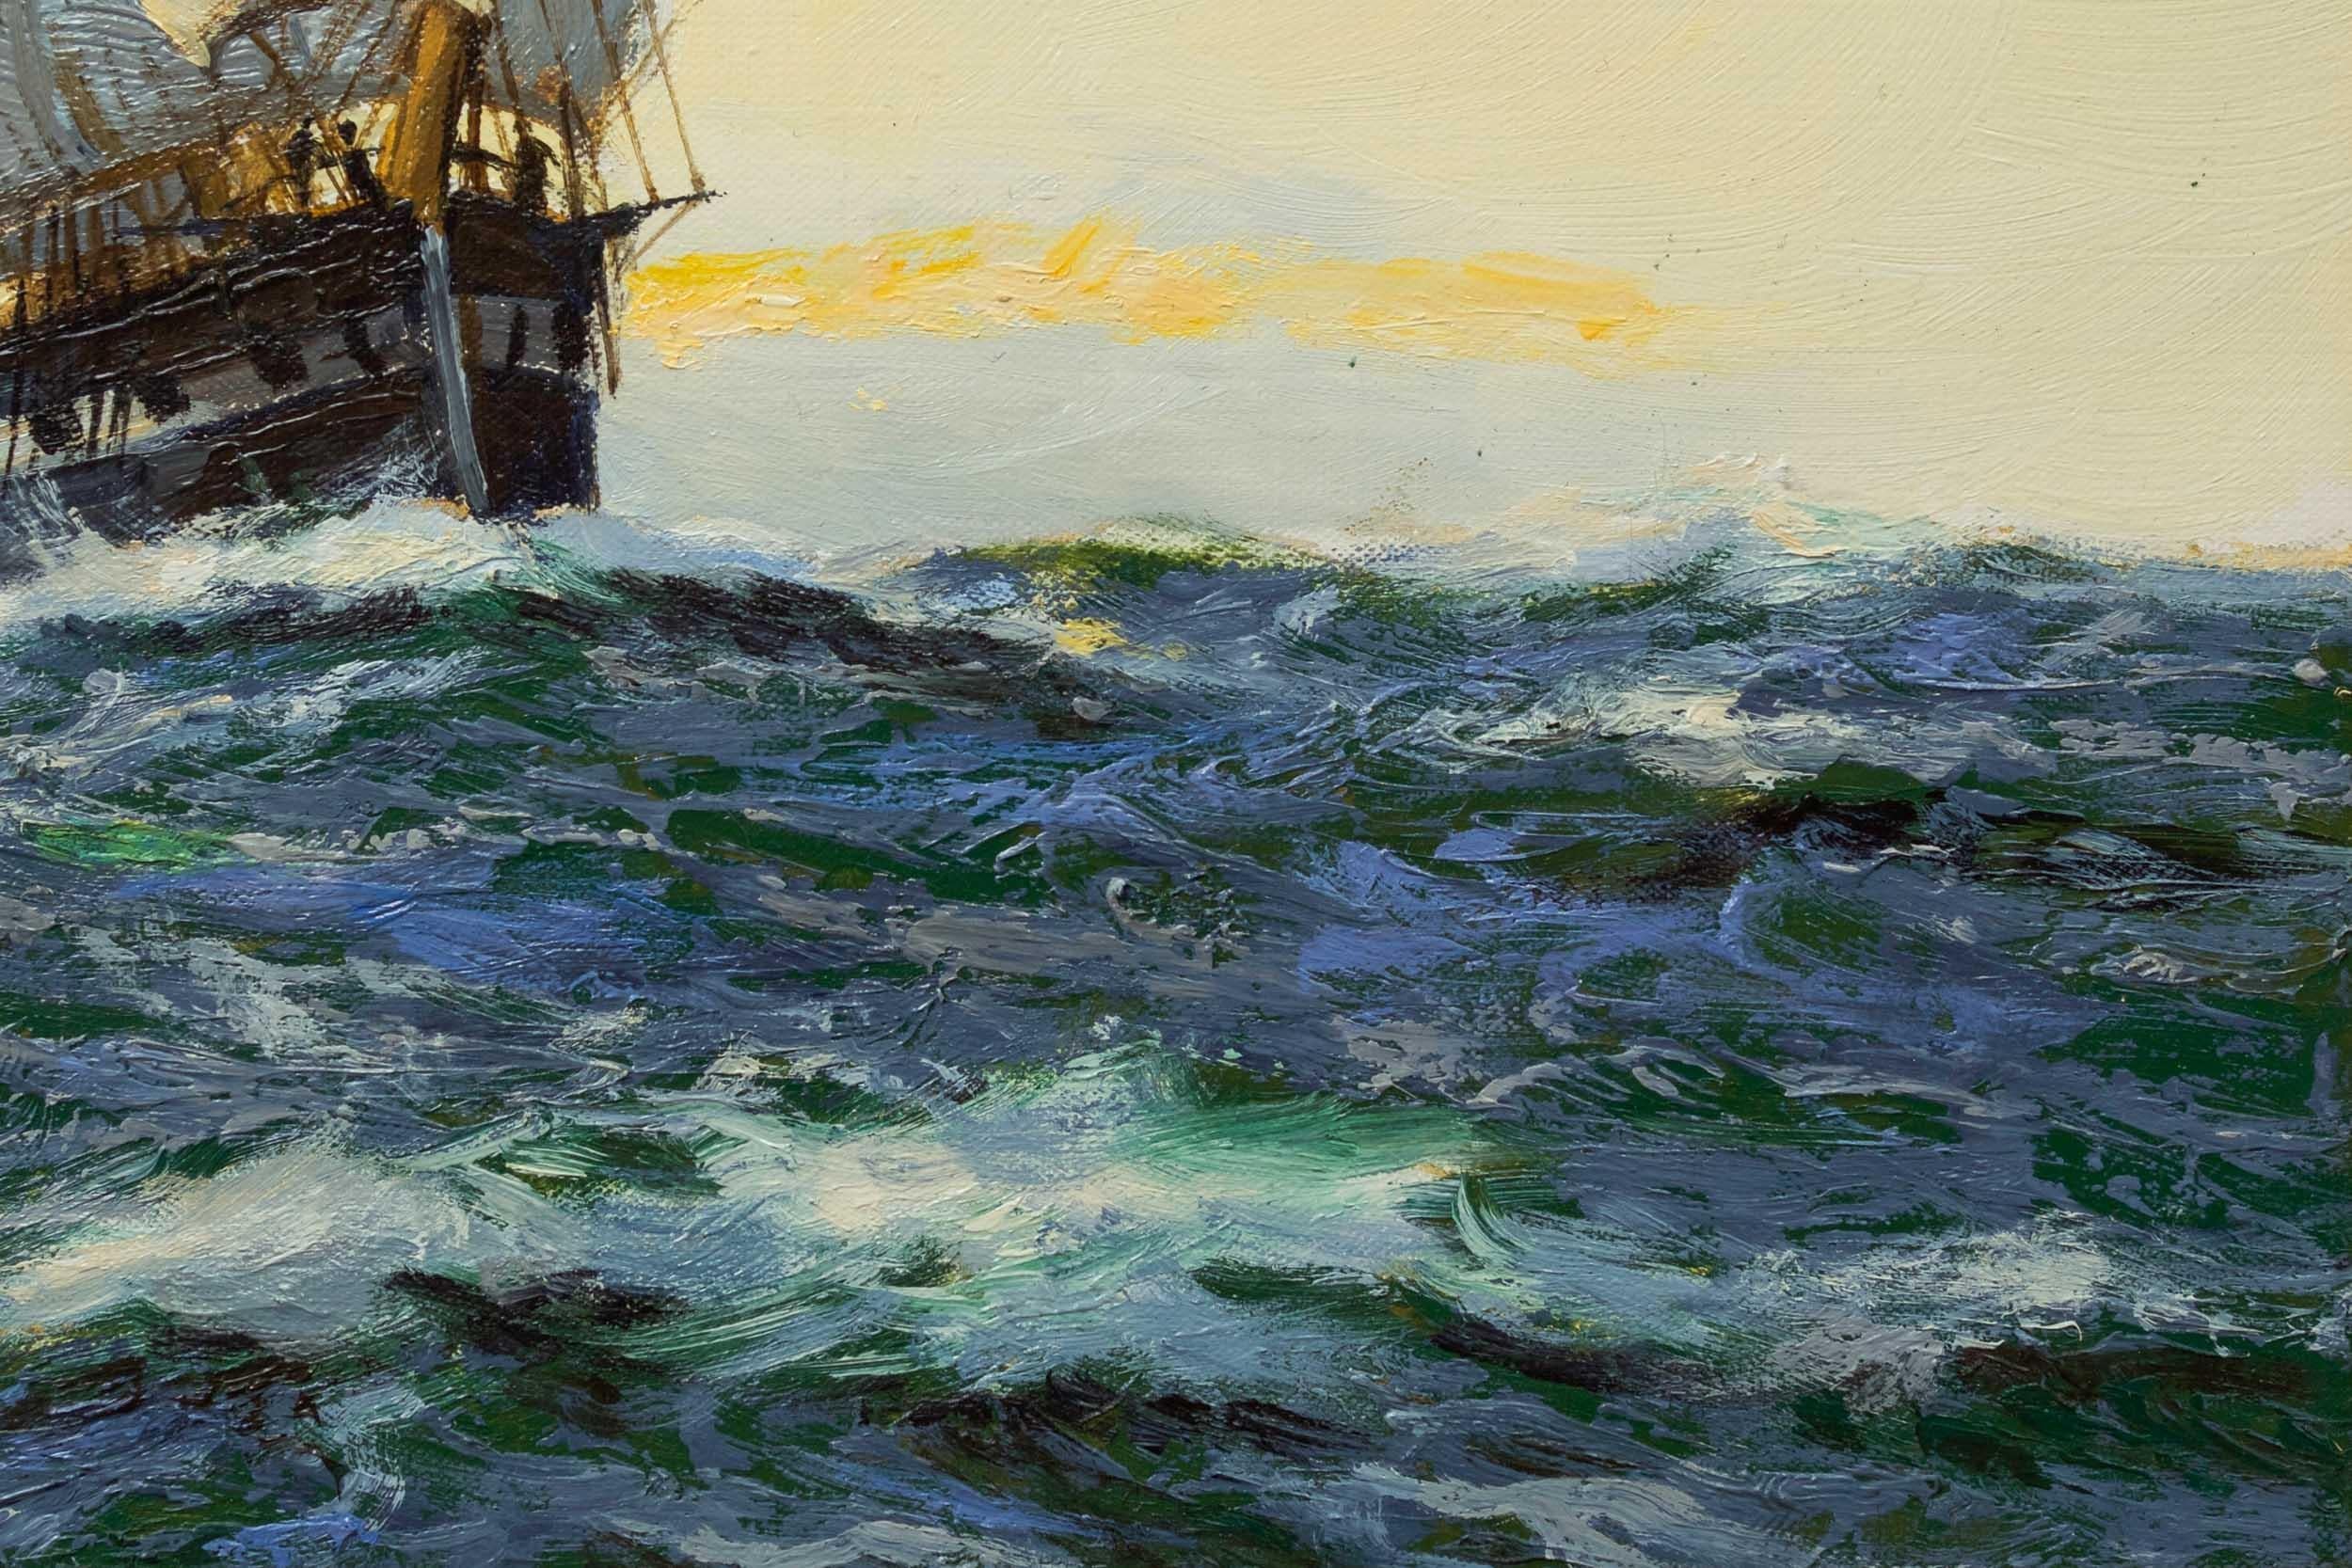 Seascape Painting 